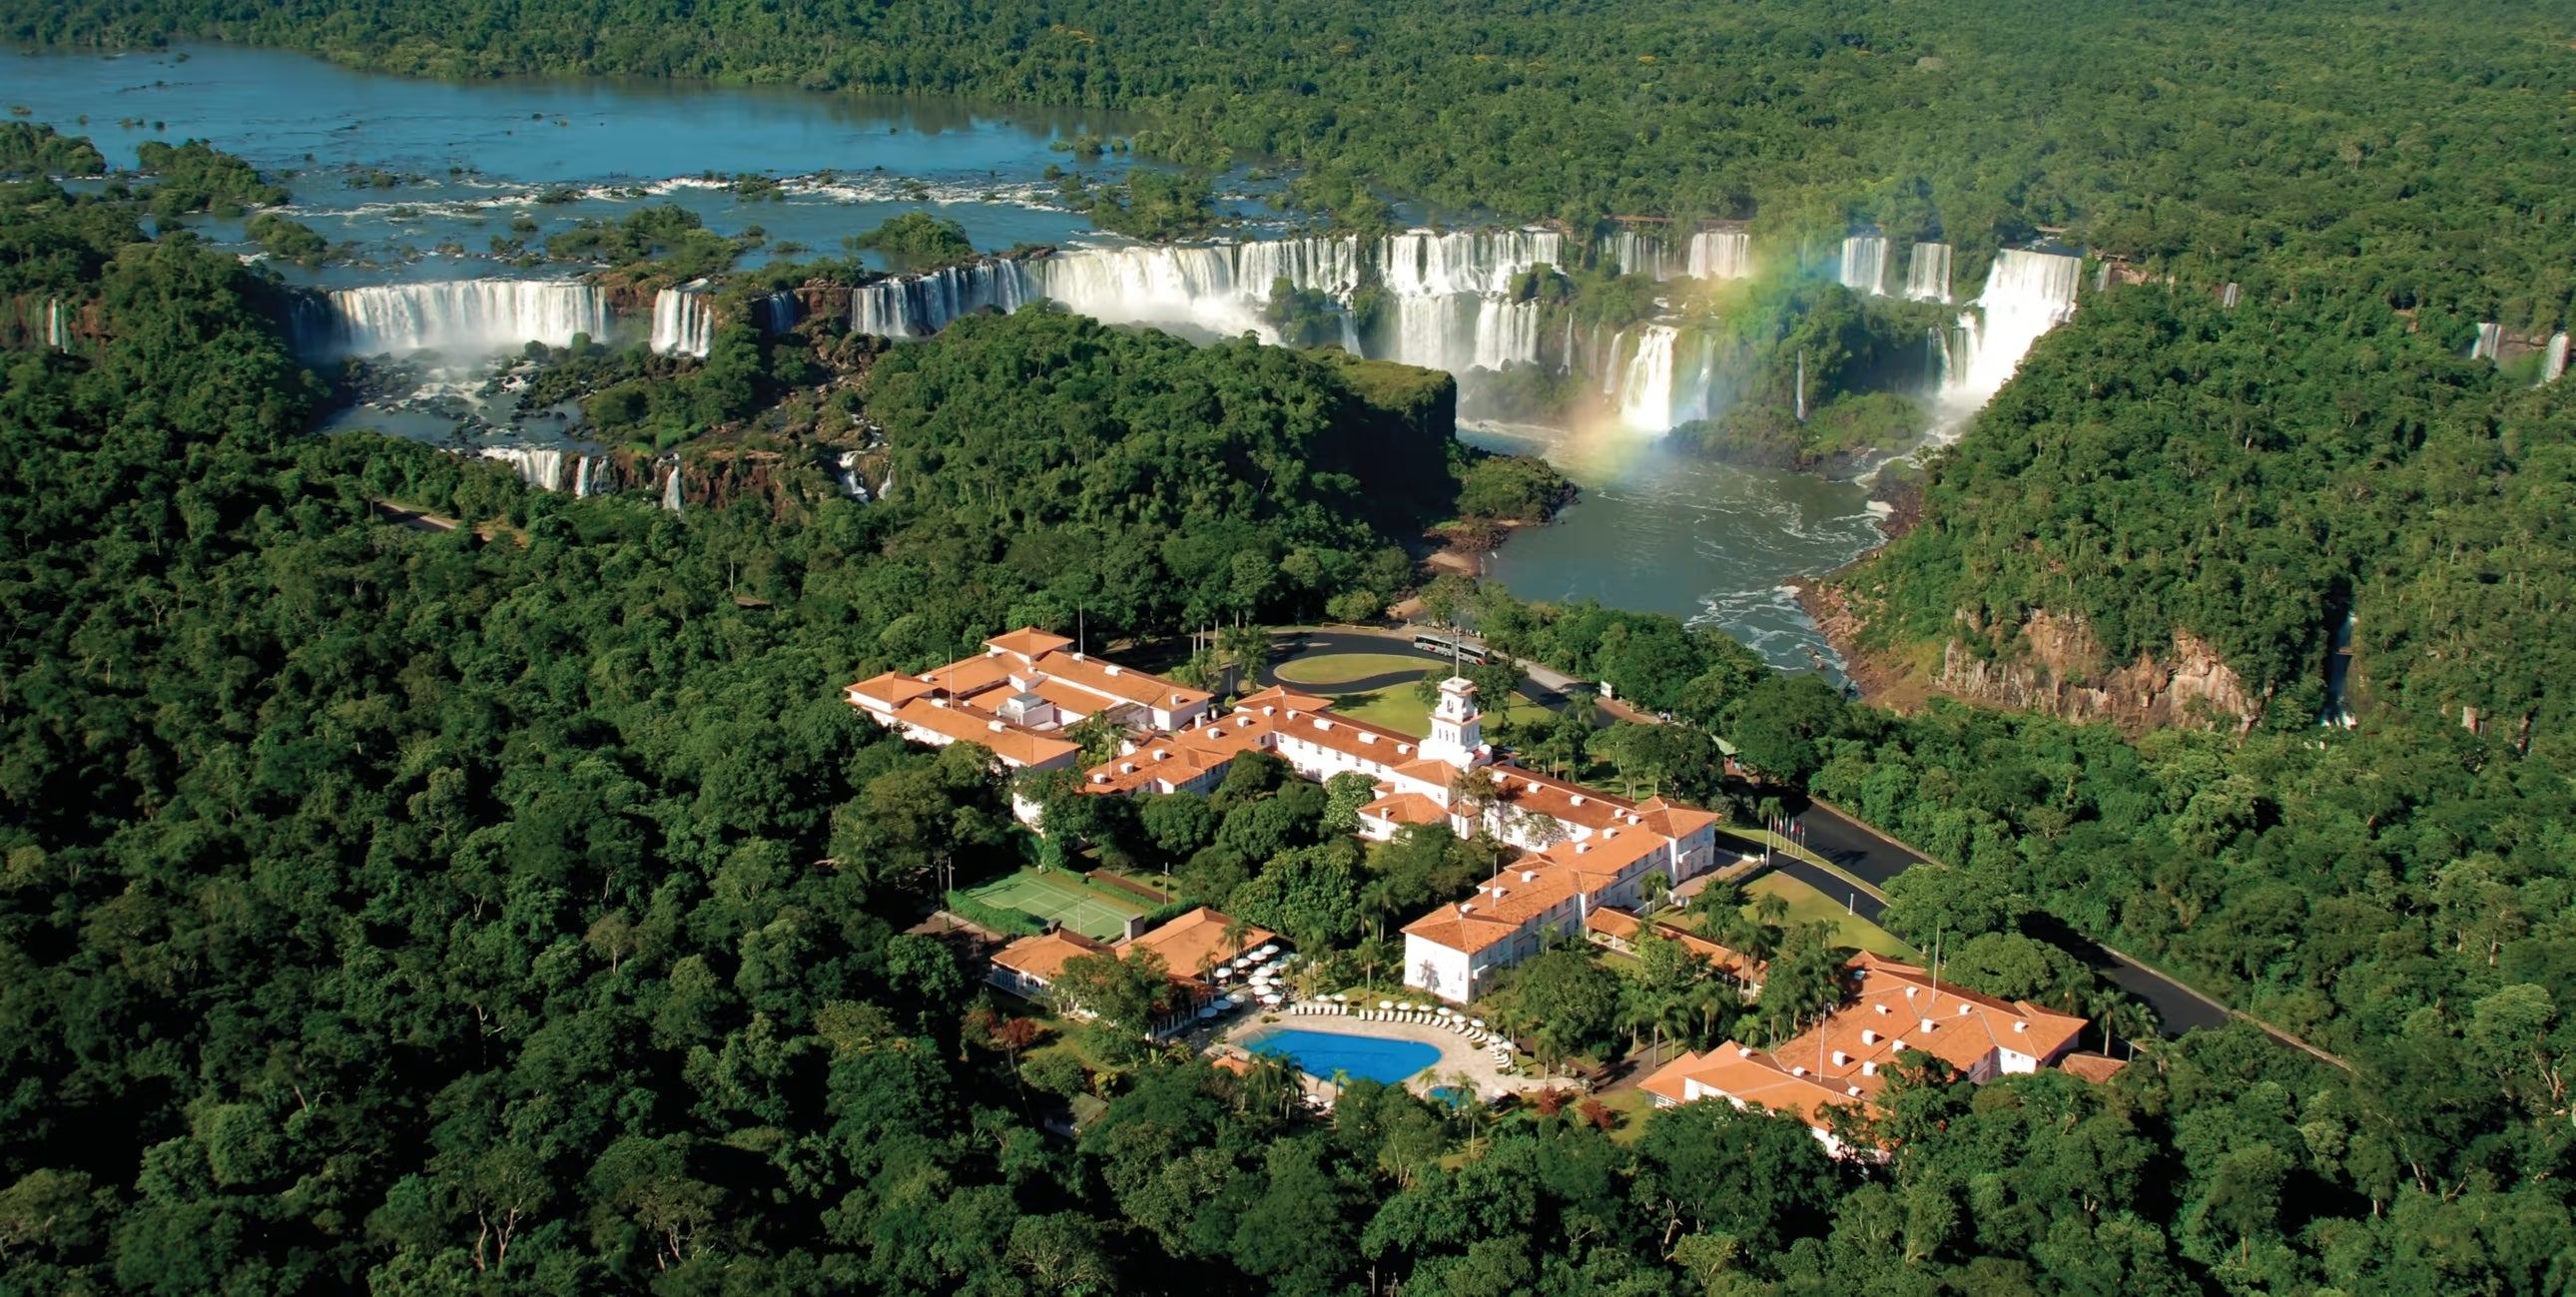 Book Tours & Activities in Iguazu Falls